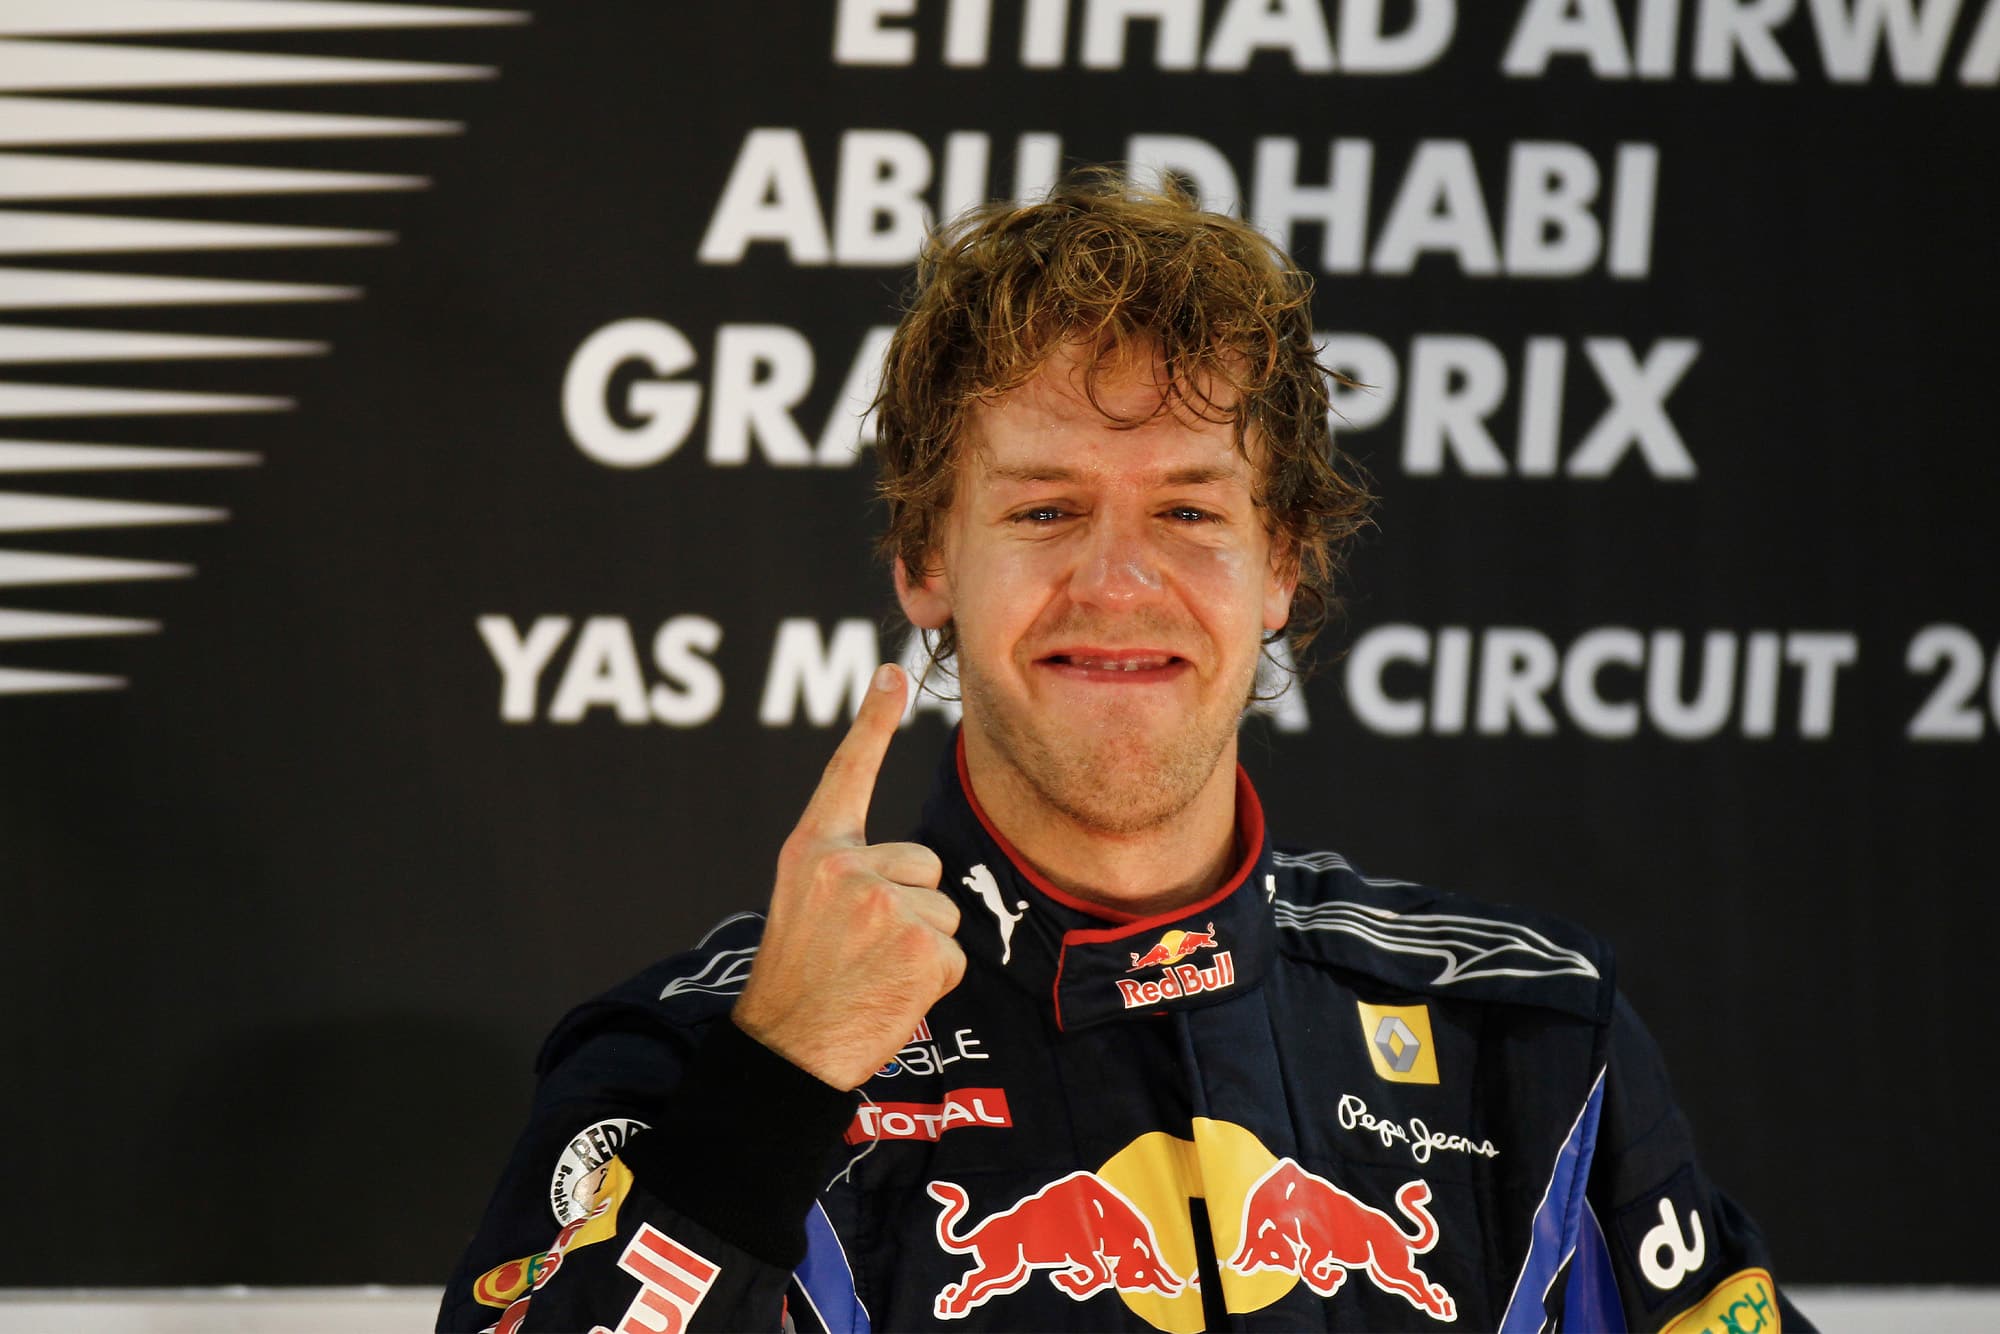 Sebastian Vettel celebrates winning the 2010 world championship and Abu Dhabi Grand Prix